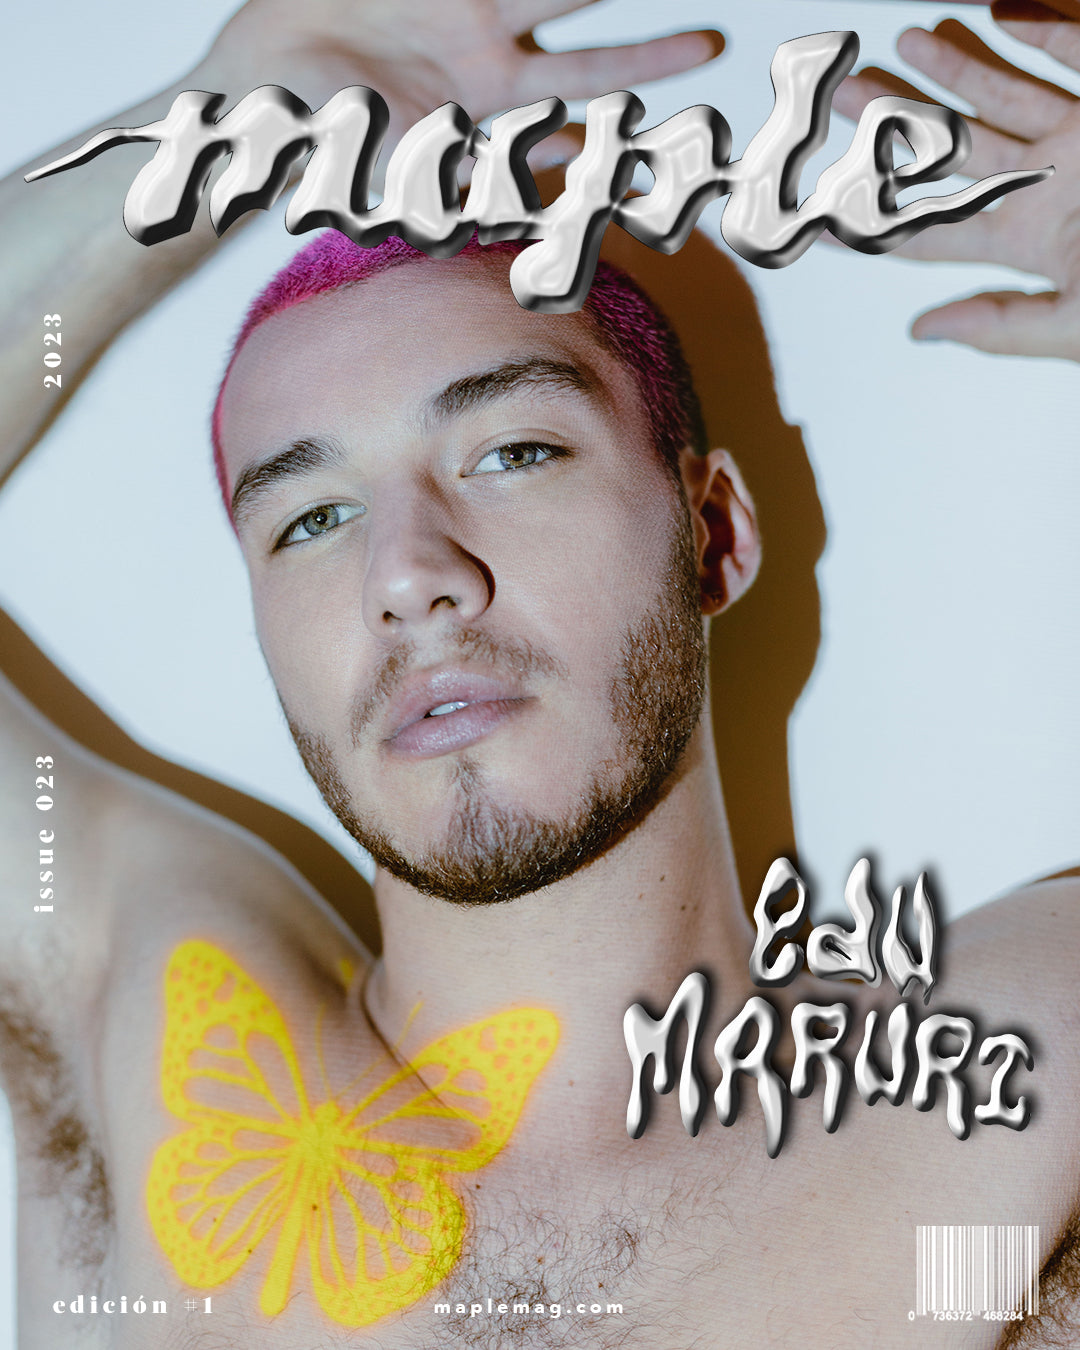 ISSUE 023 Edición 1 starring Edu Maruri